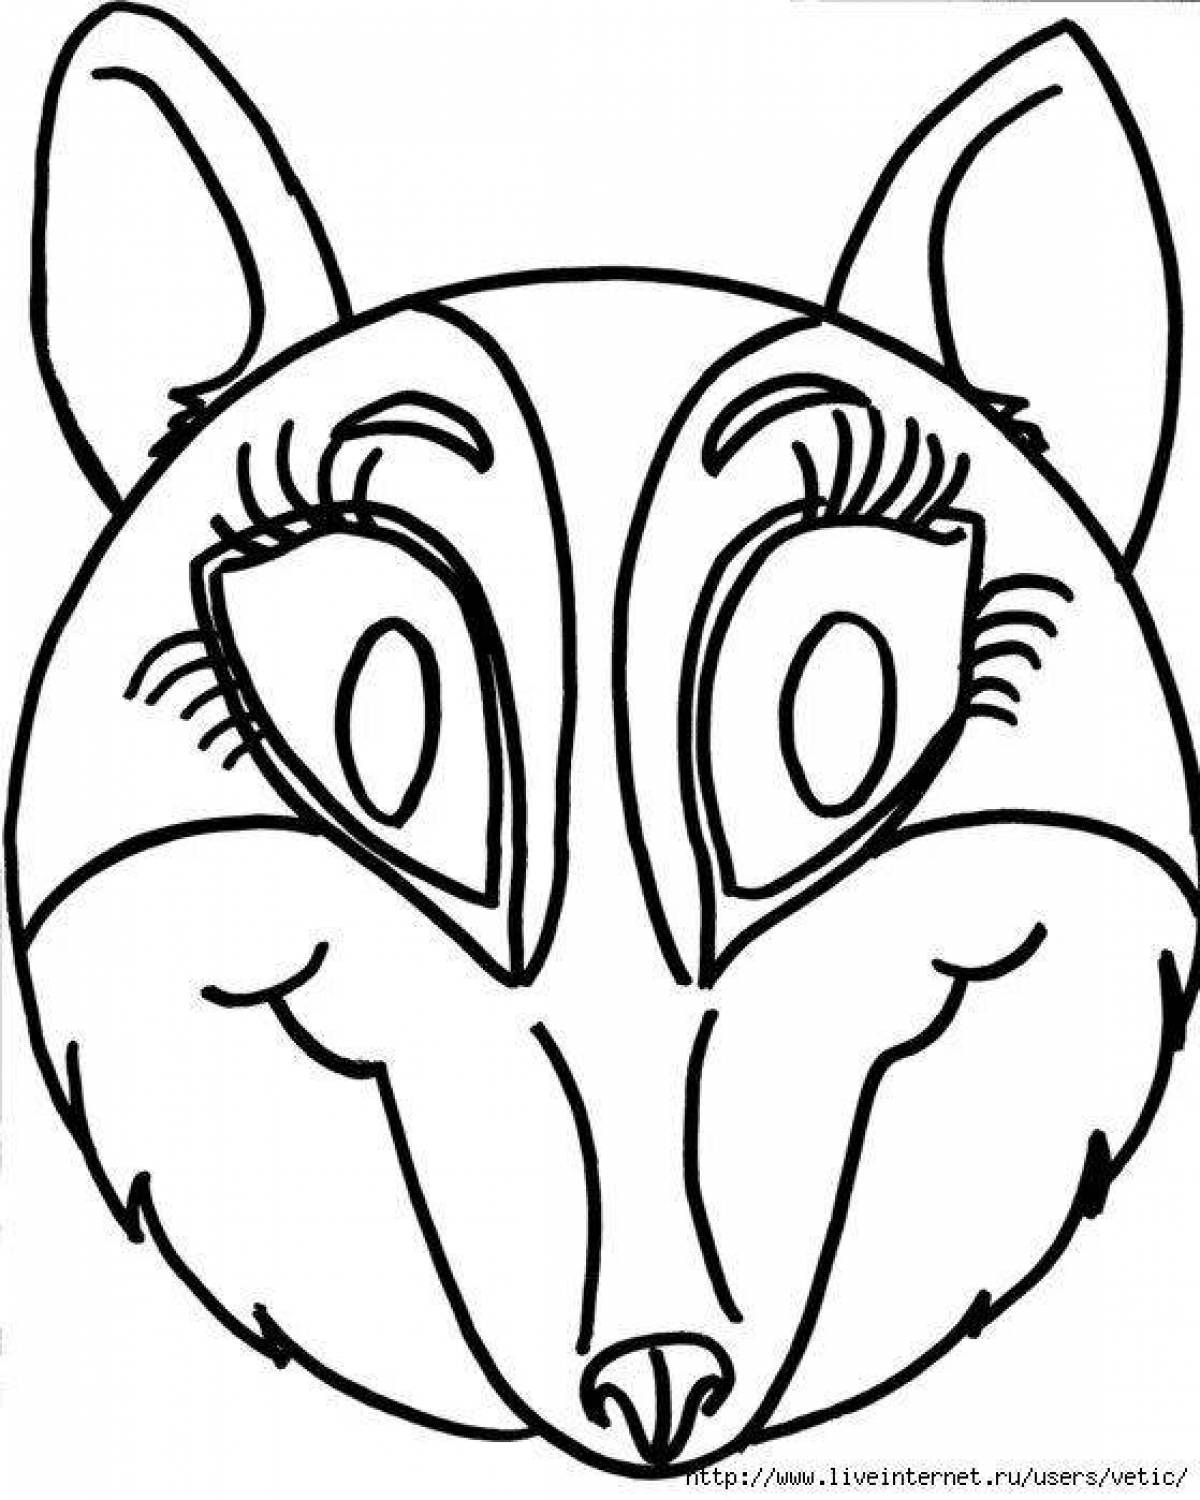 Color-fantastic fox mask coloring page